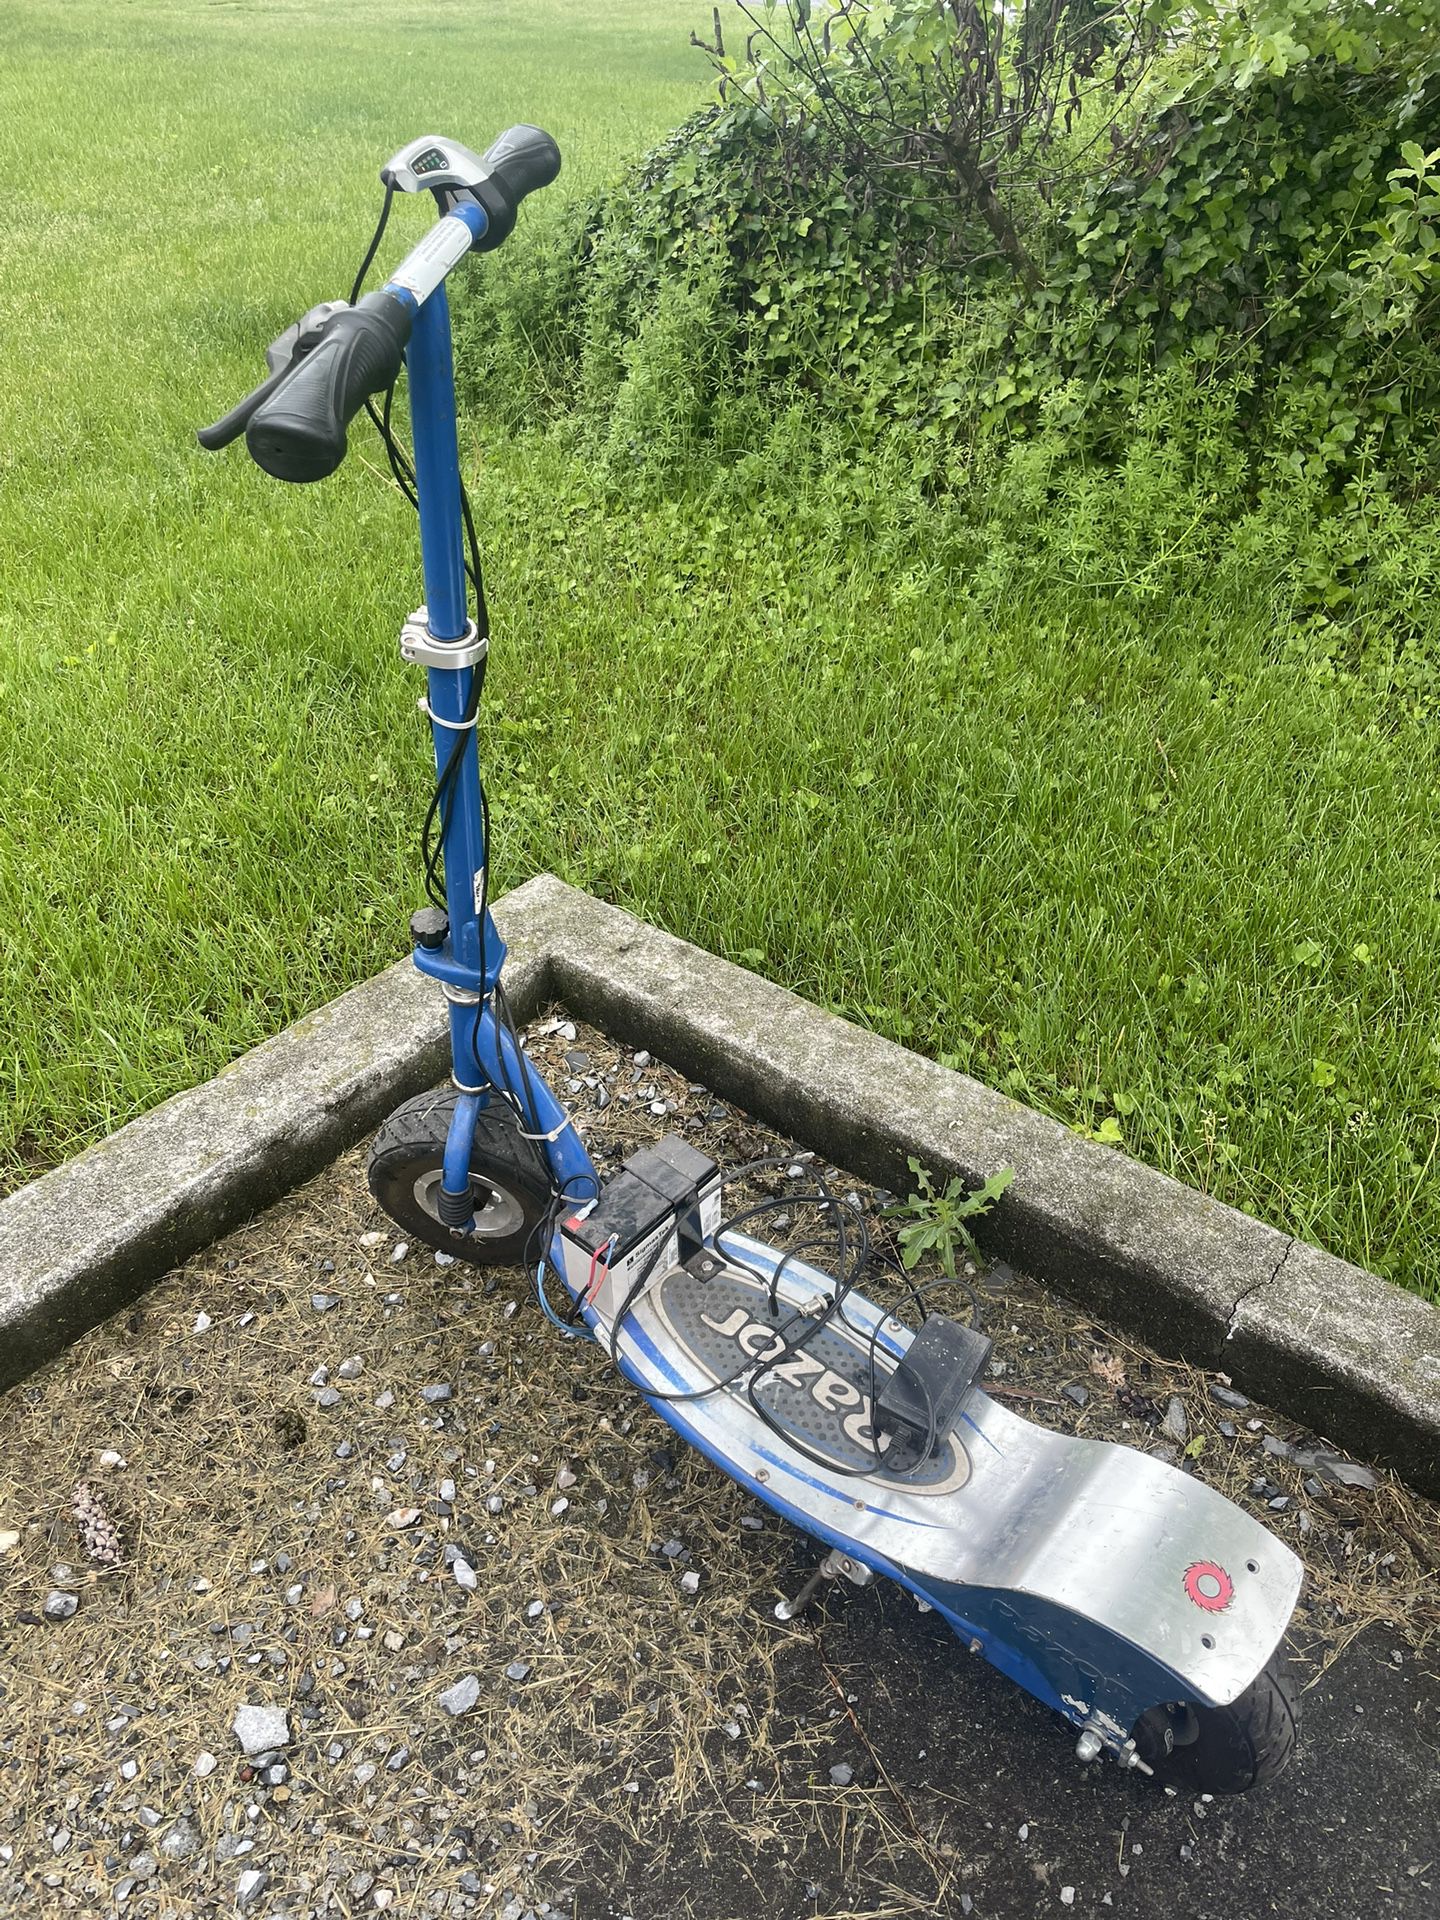 Electric Razor Scooter